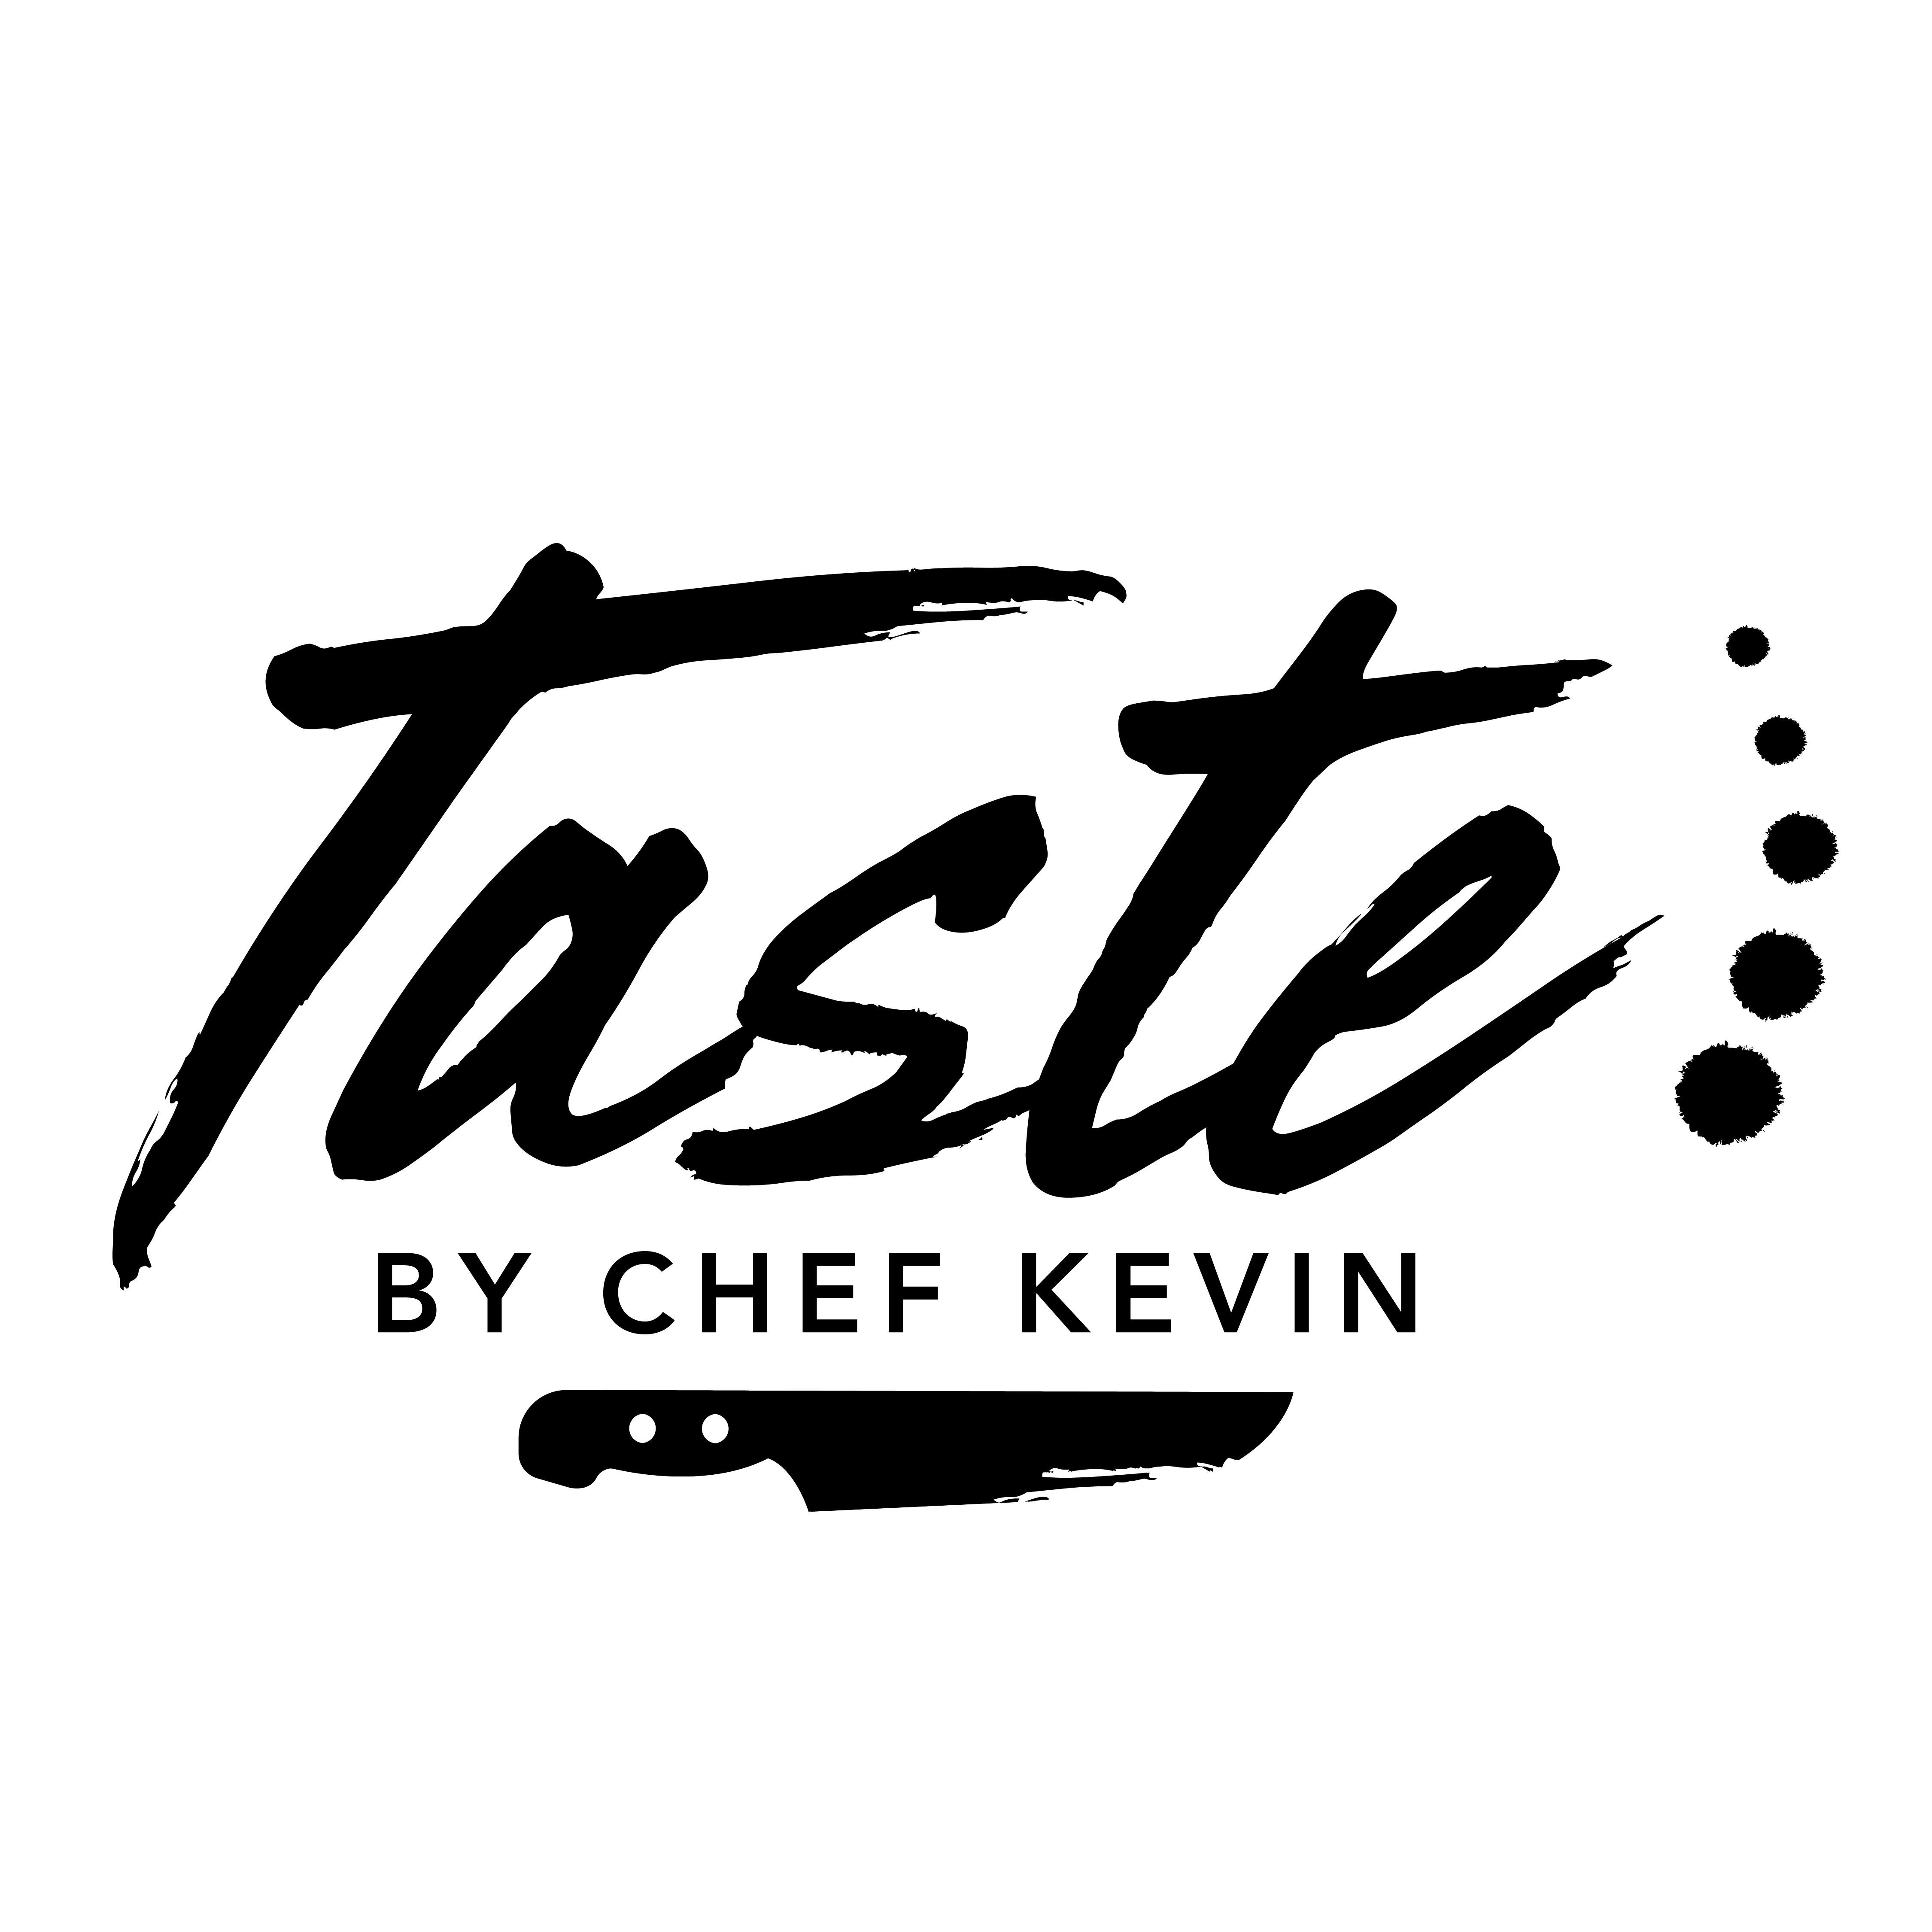 Taste Logo Final-01